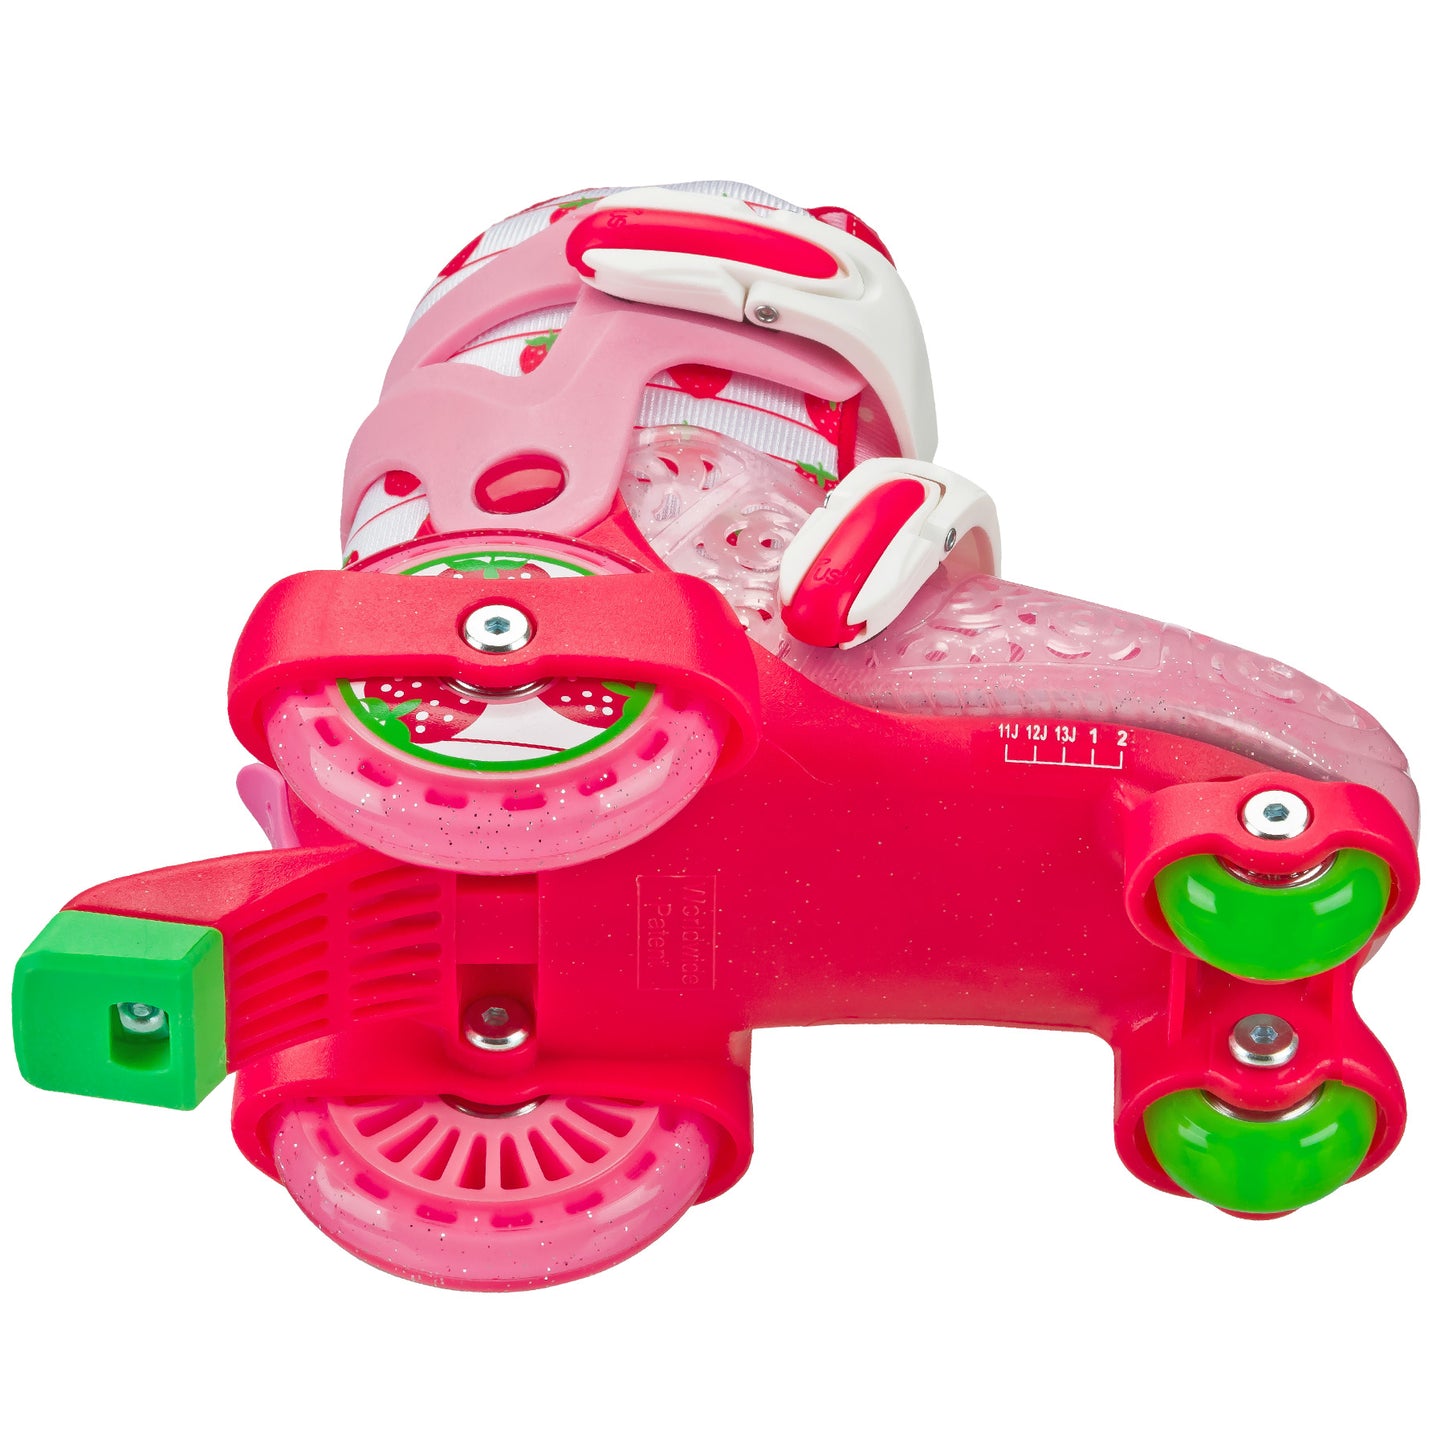 Fun Roll Girl's Jr Adjustable Roller Skates